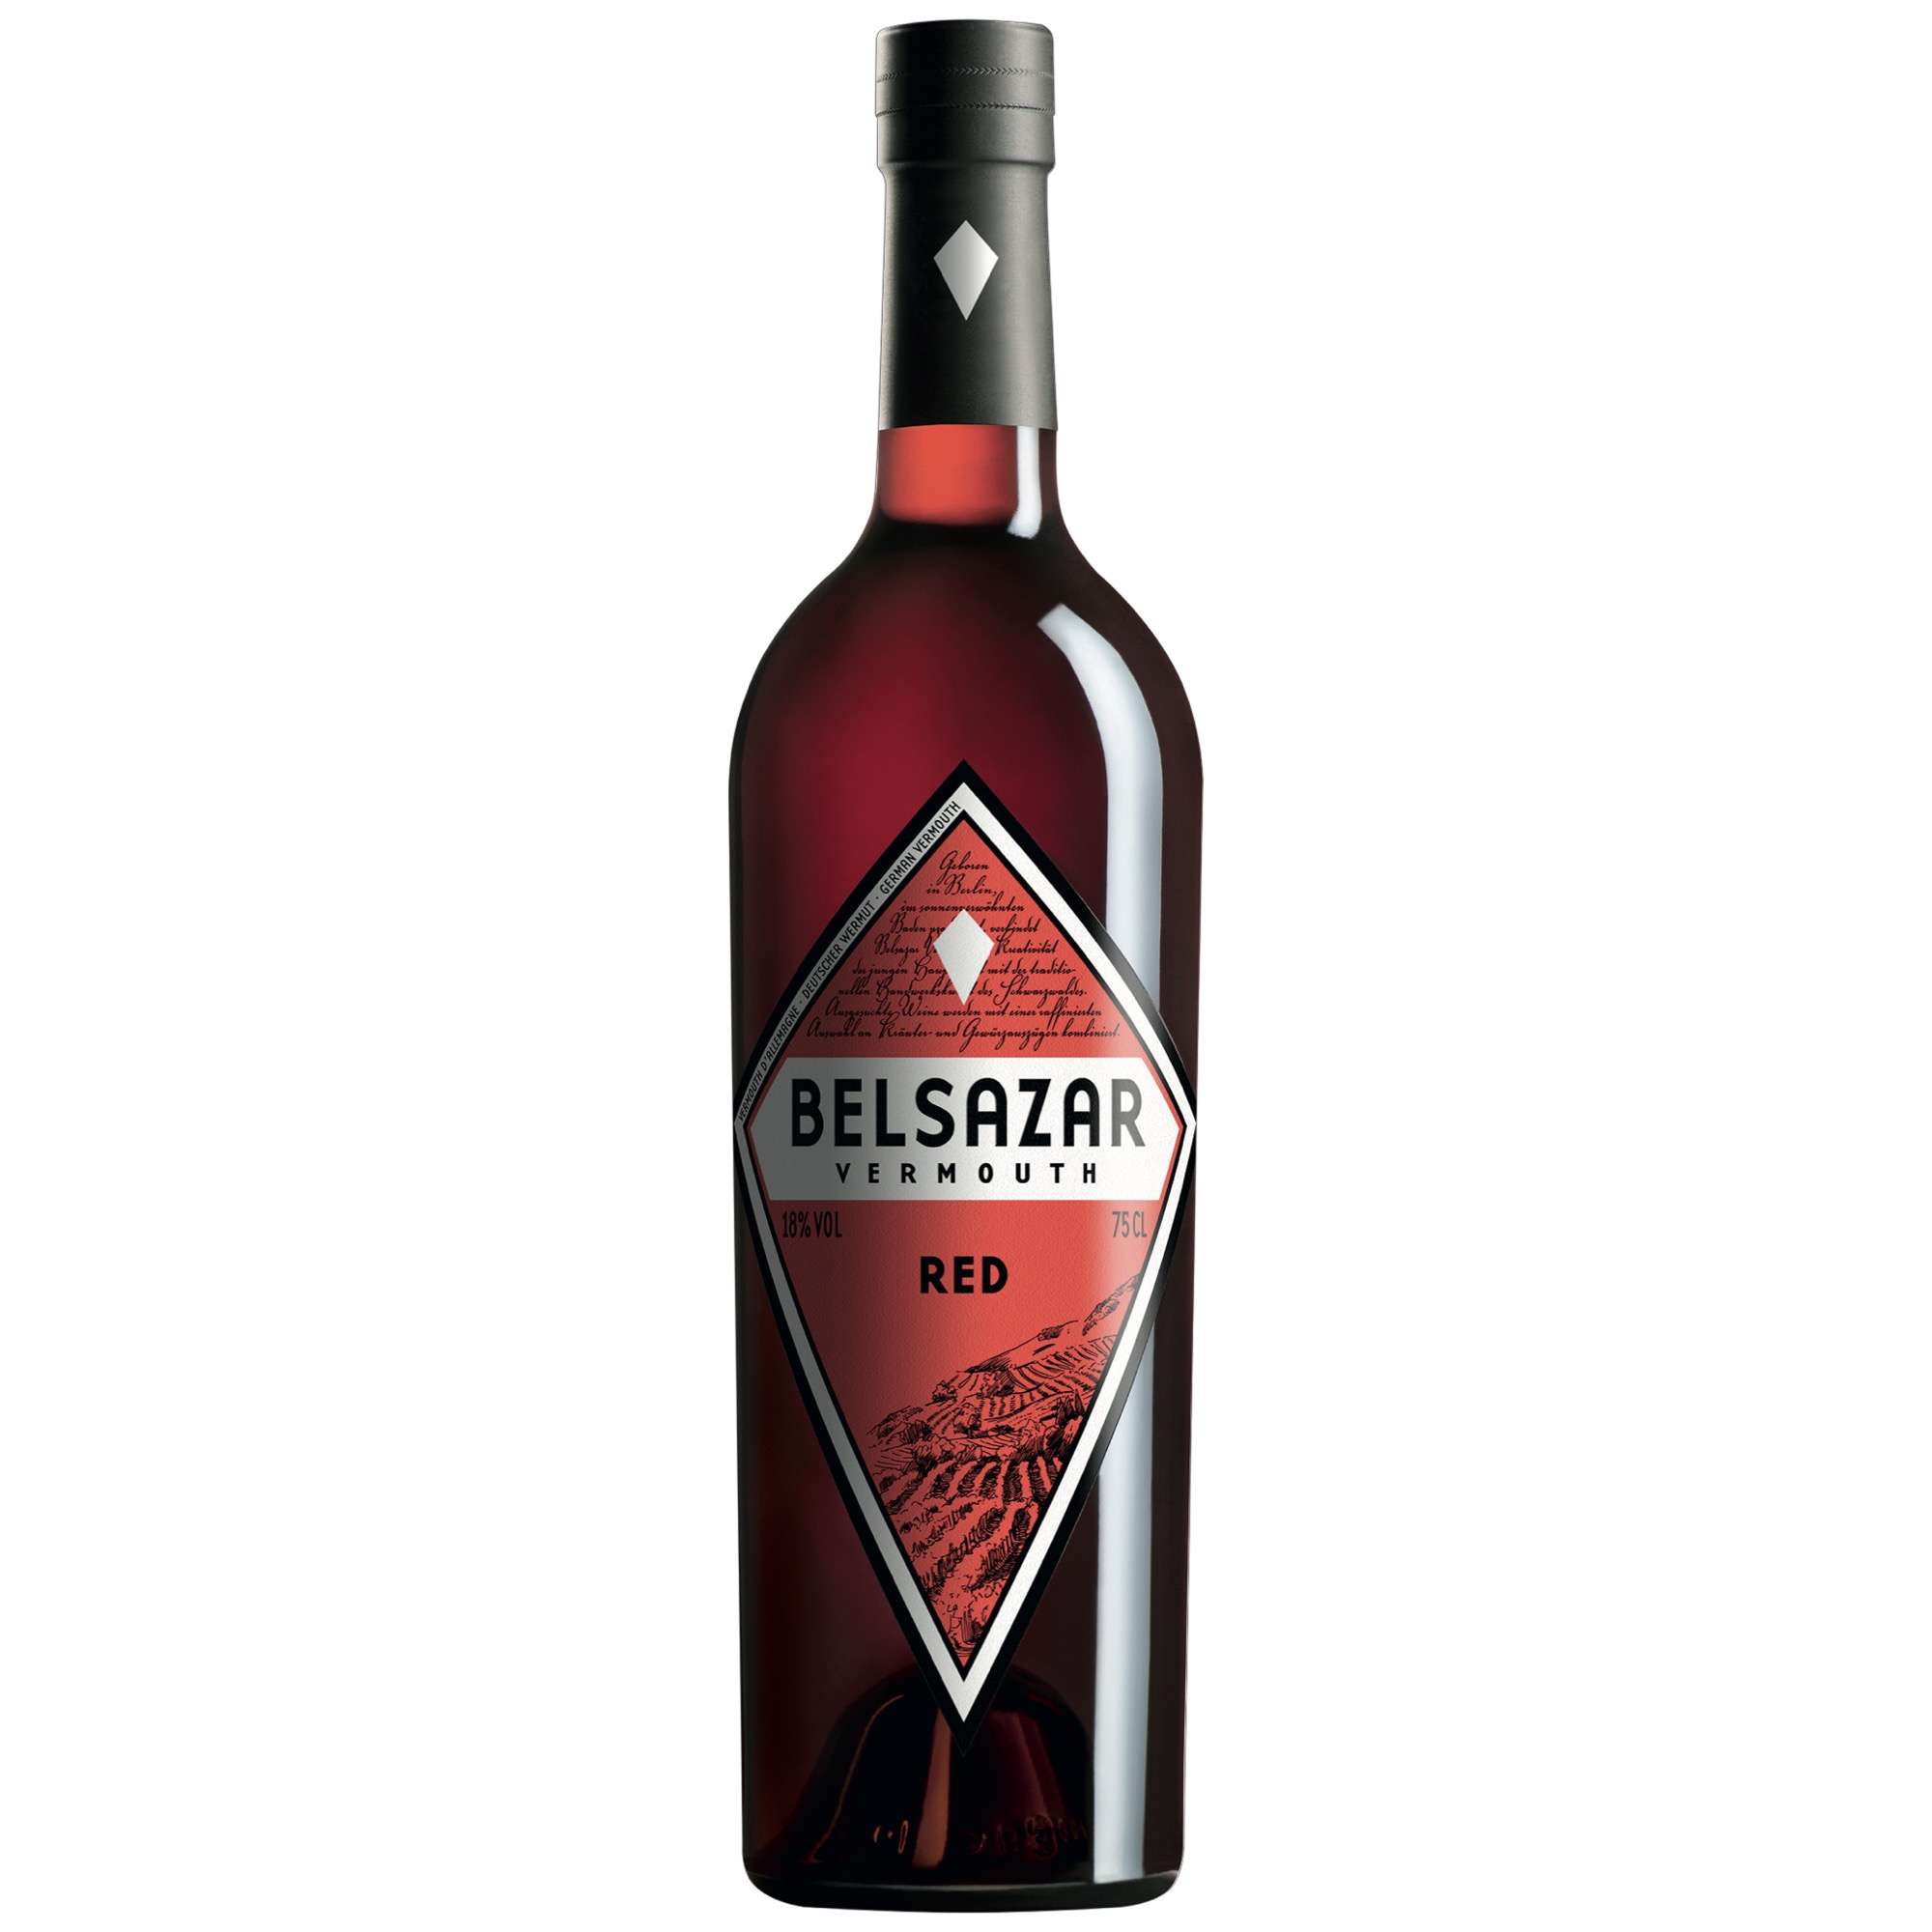 Belsazar Vermouth 0,75l, Red